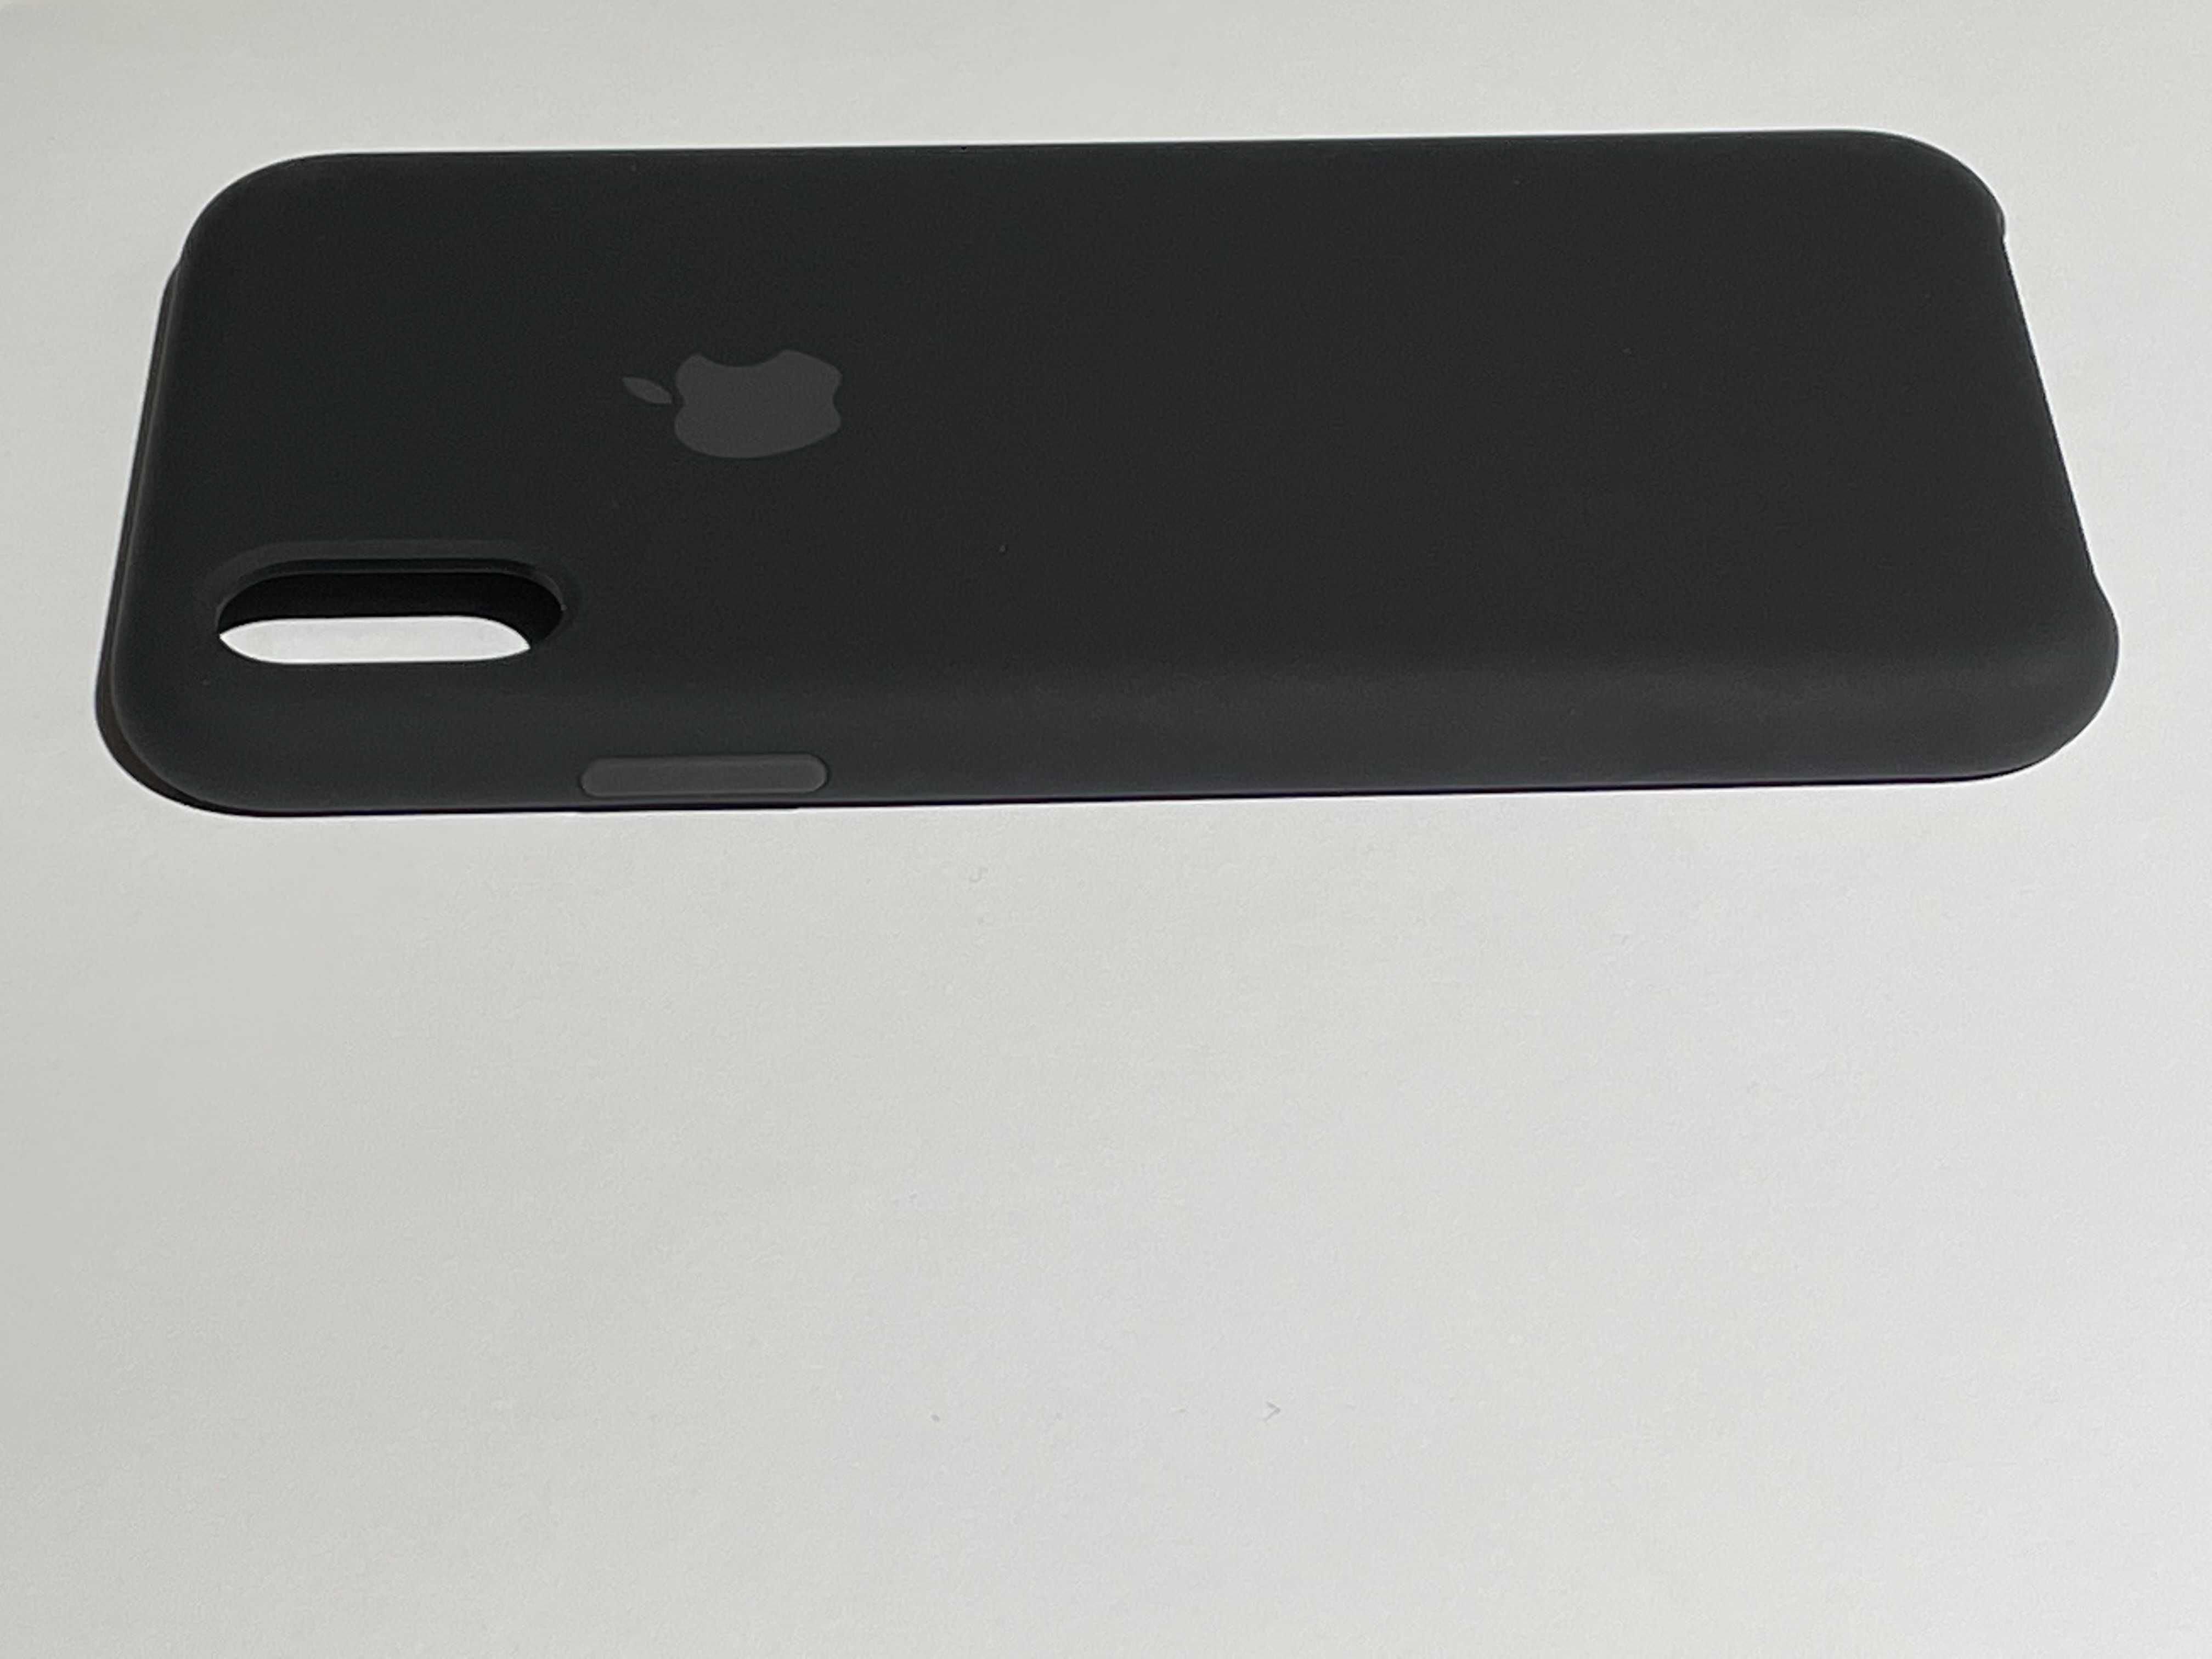 Silicone Case Iphone X, XS чохол для айфон 10